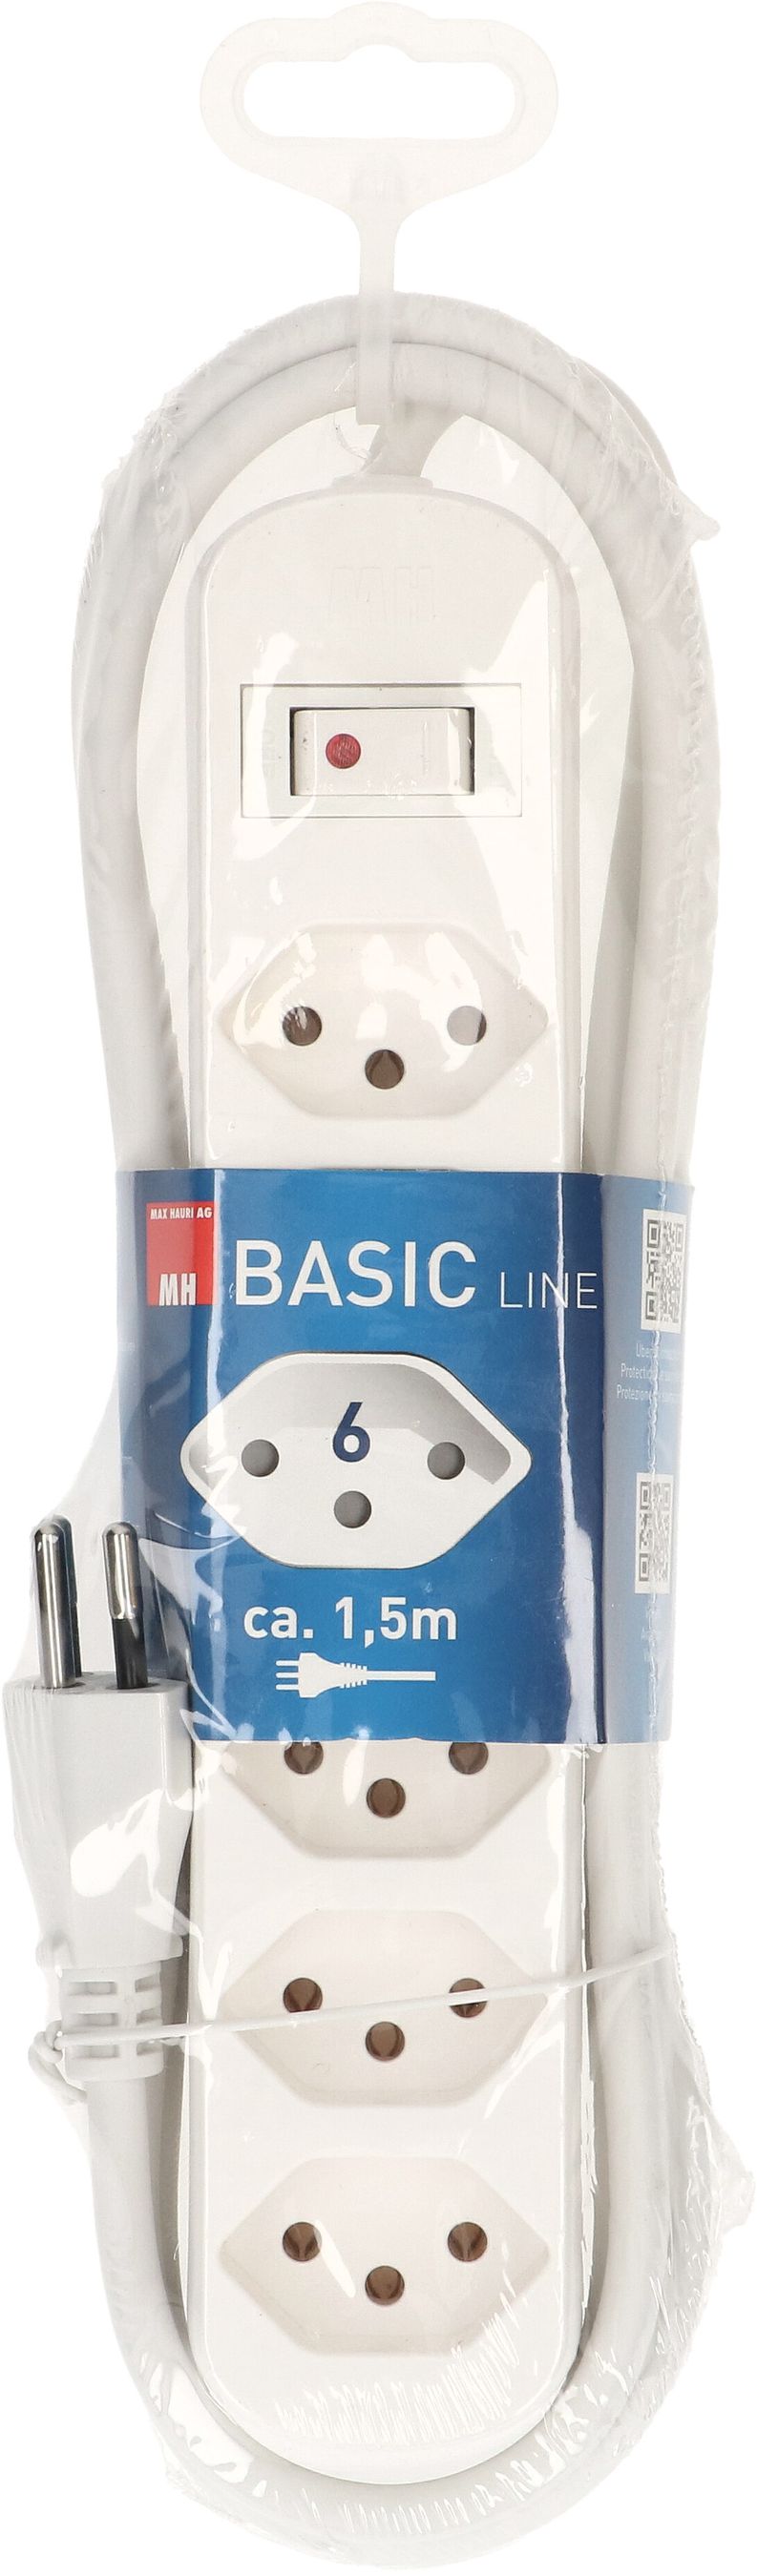 multipresa Basic Line 6x tipo 13 bianco interruttore 1.5m